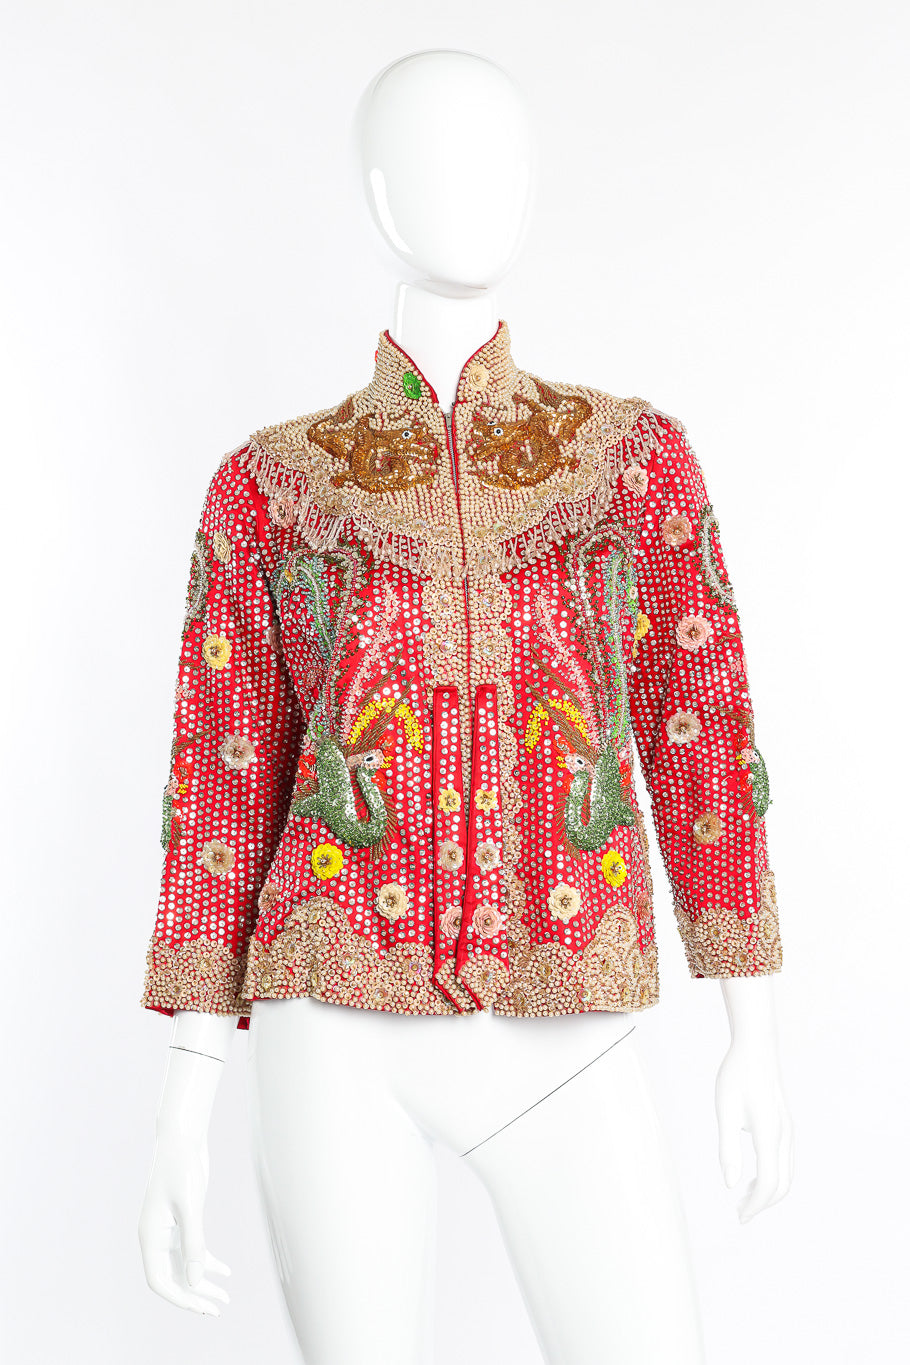 Vintage Dynasty Sequin Dragon Silk Jacket front view on mannequin @Recessla